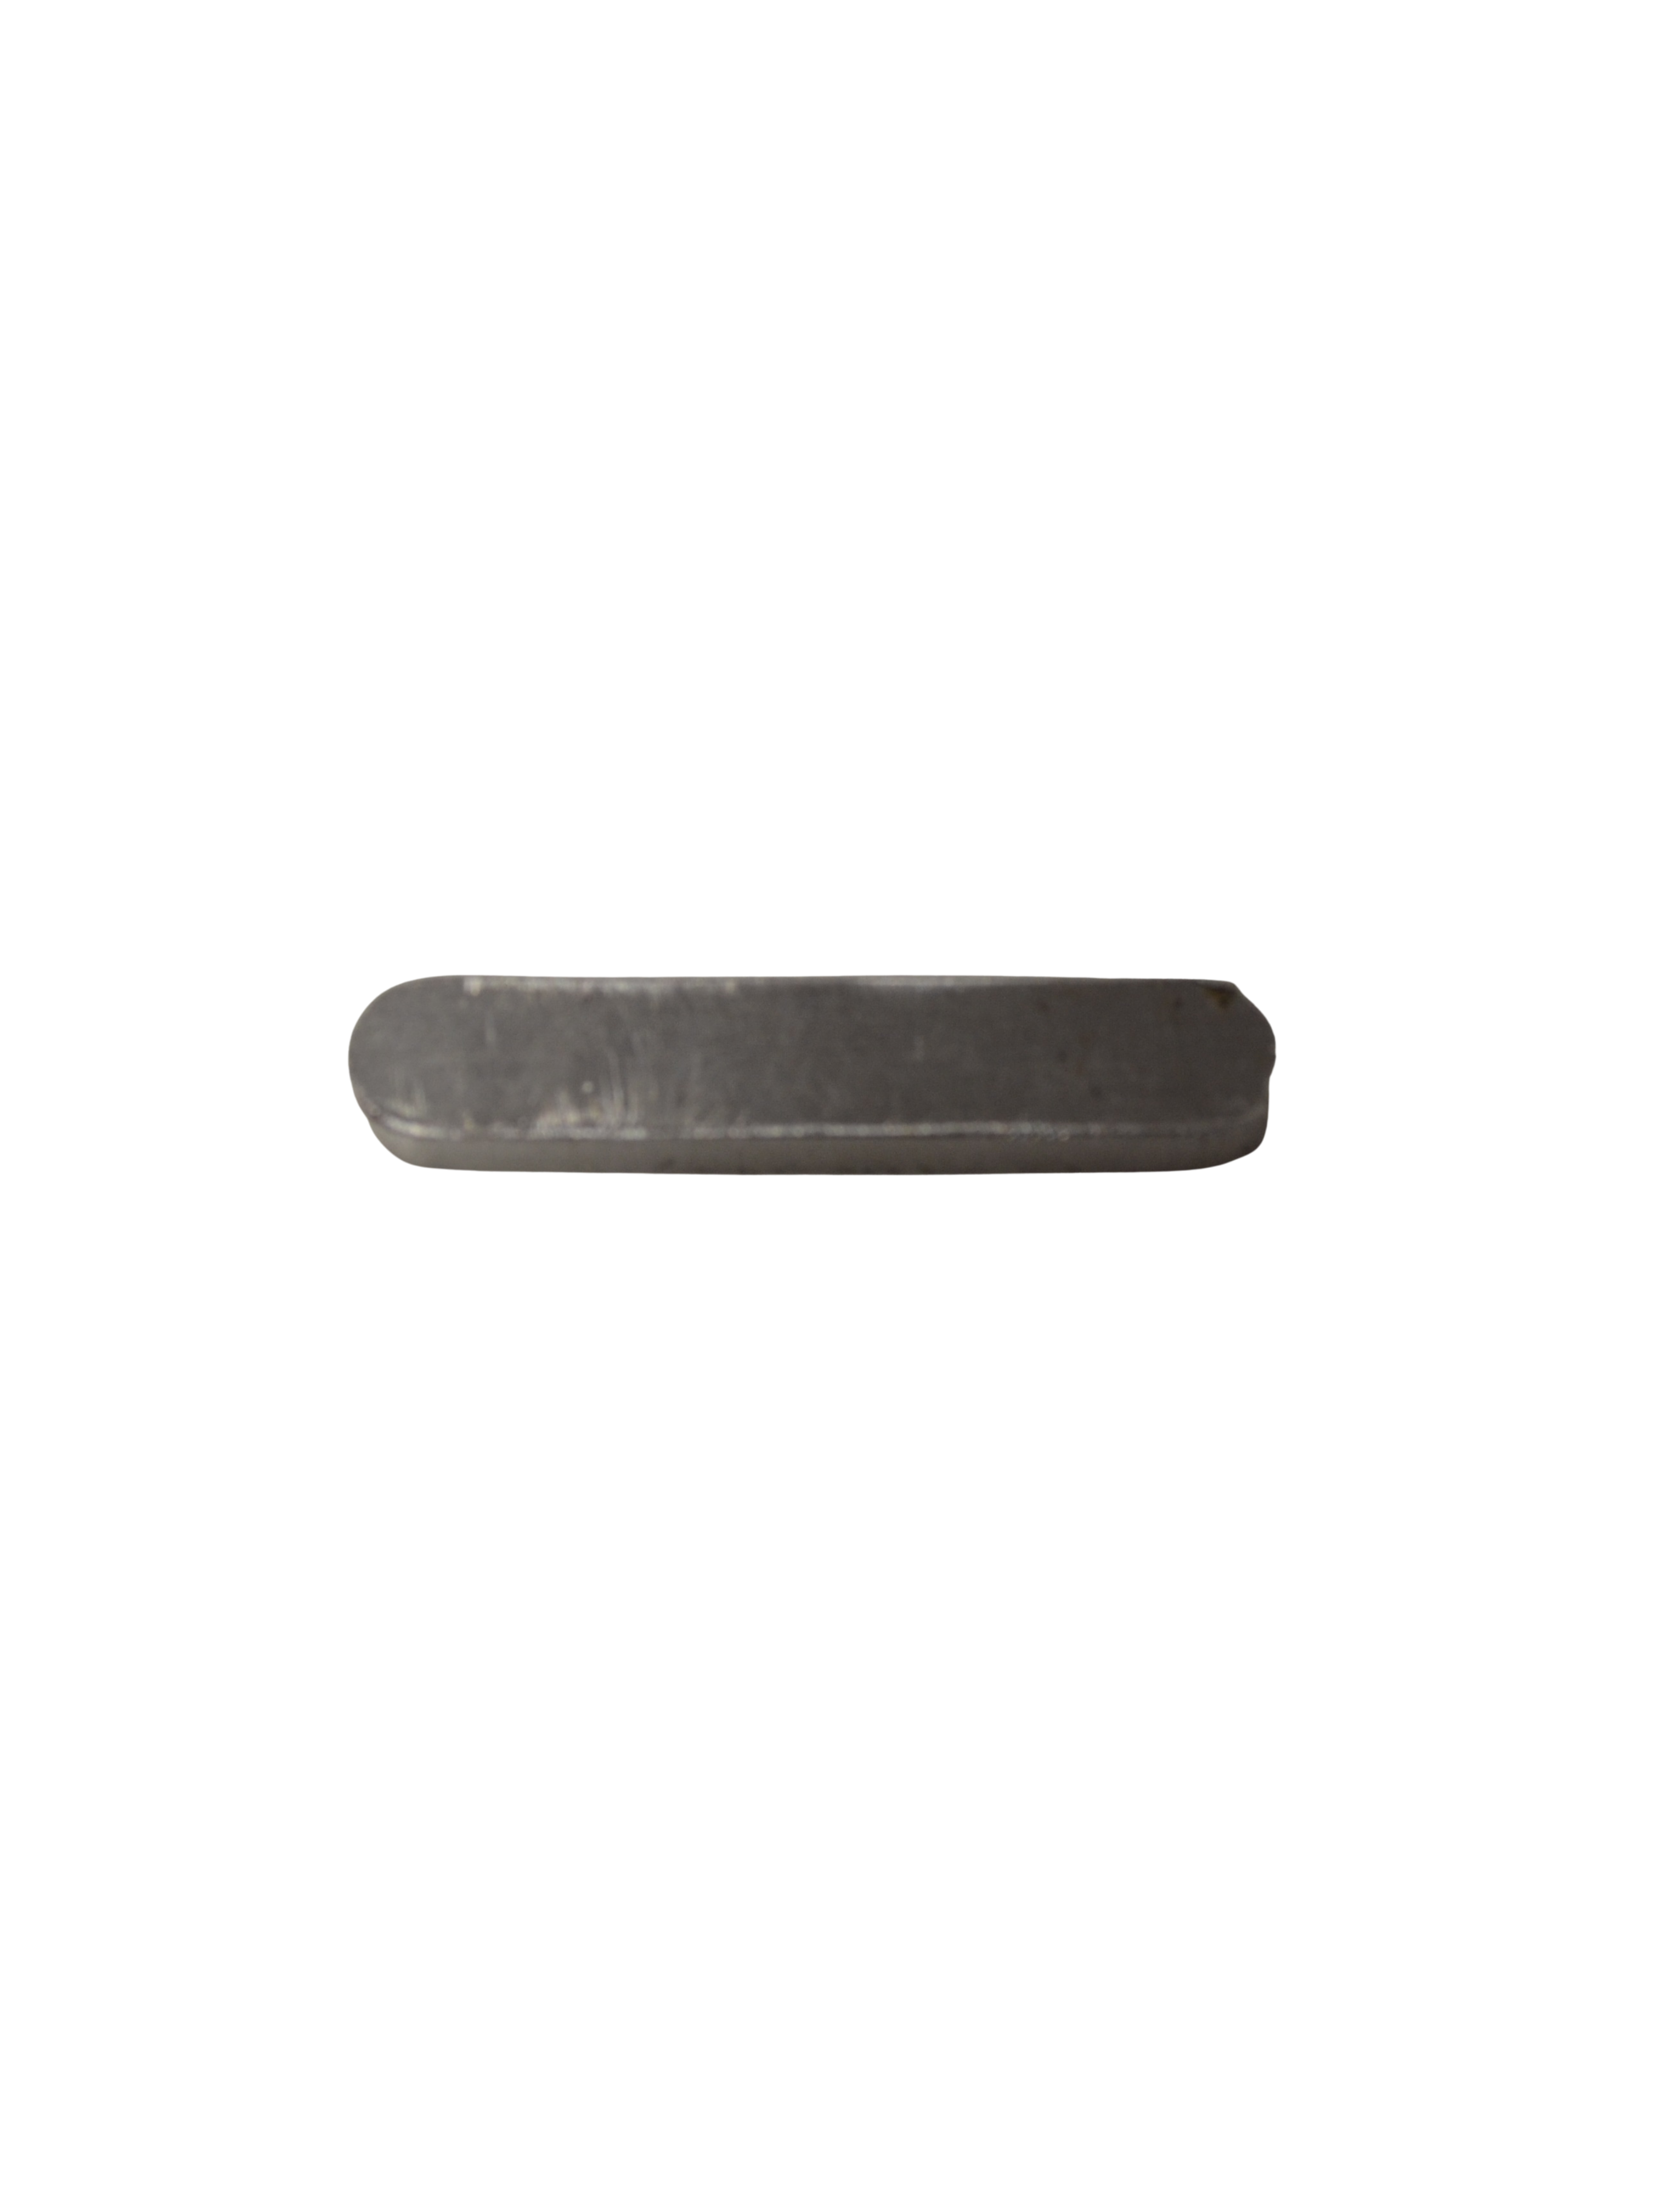 Stainless/Aluminium Axle Key - Short 42.5mm